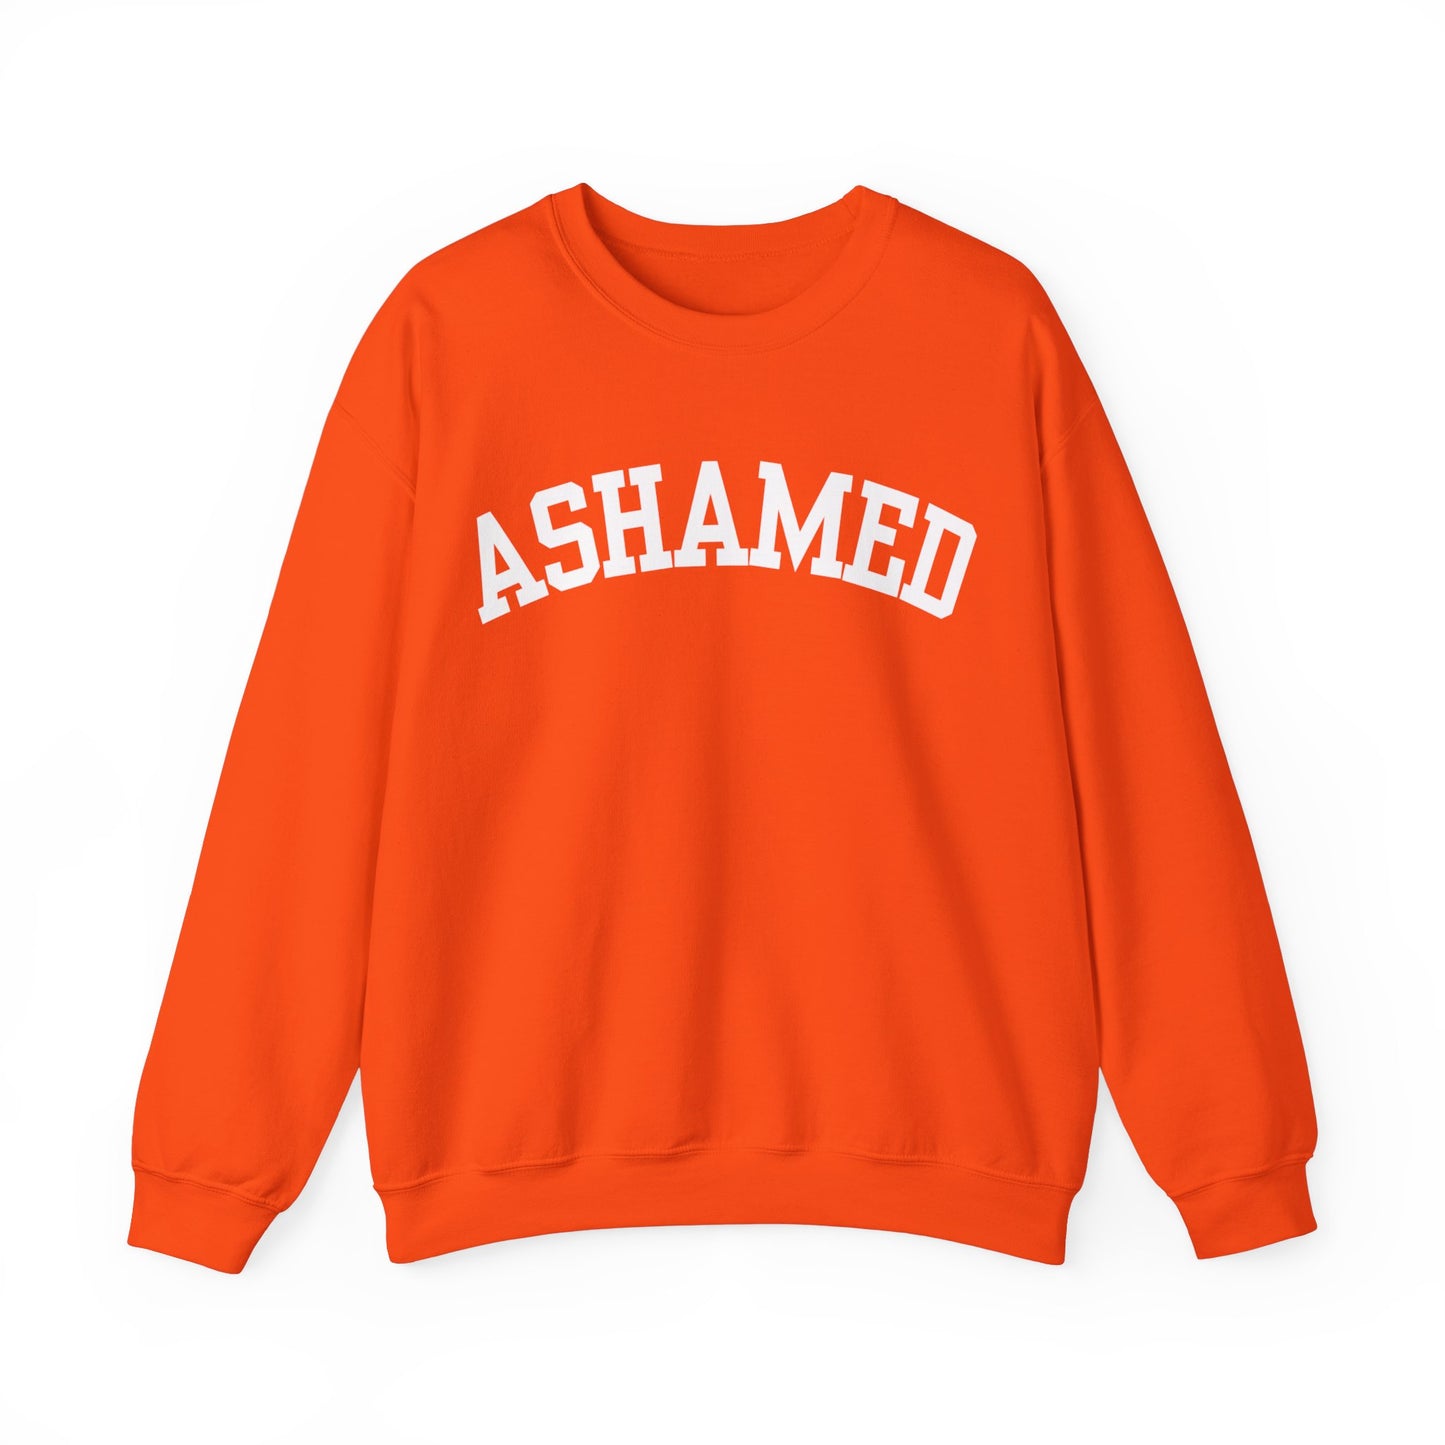 "Ashamed" Sweatshirt